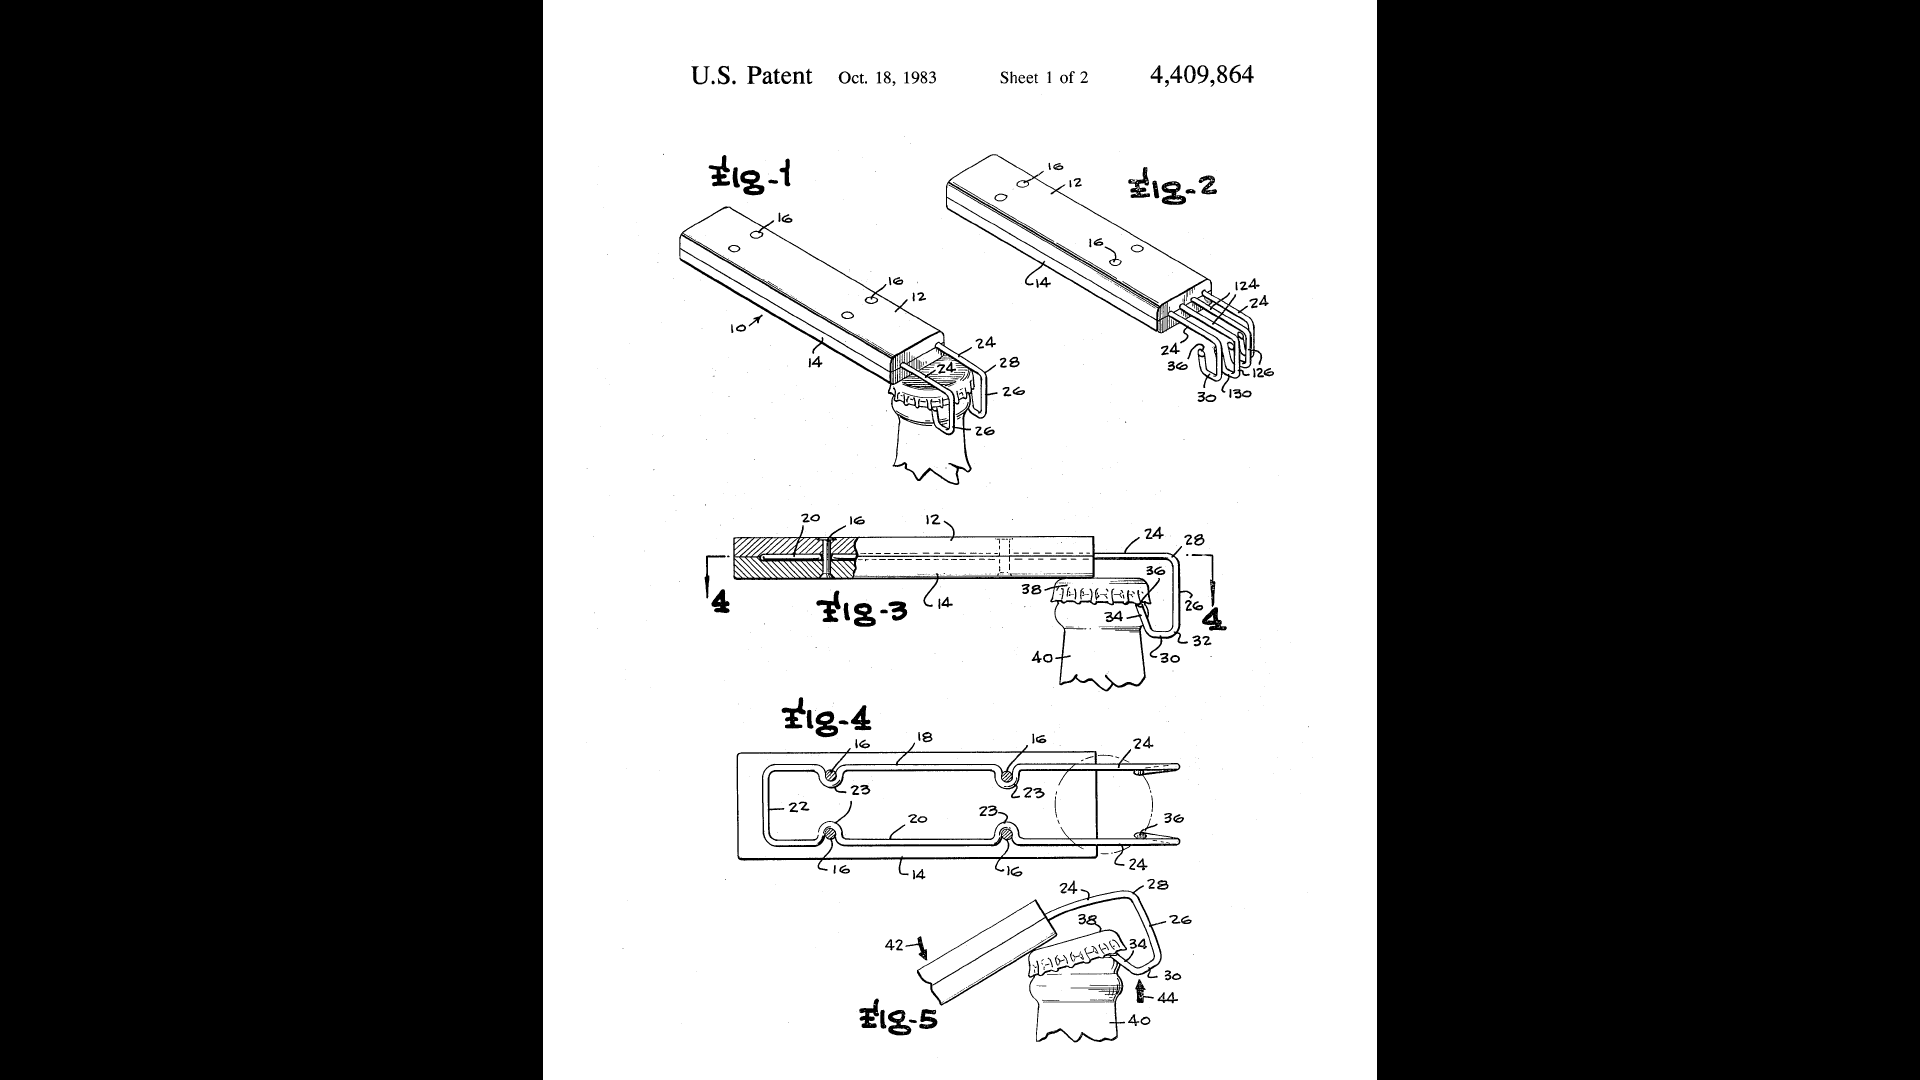 Tom Gaskins Patent No. 4,409,864